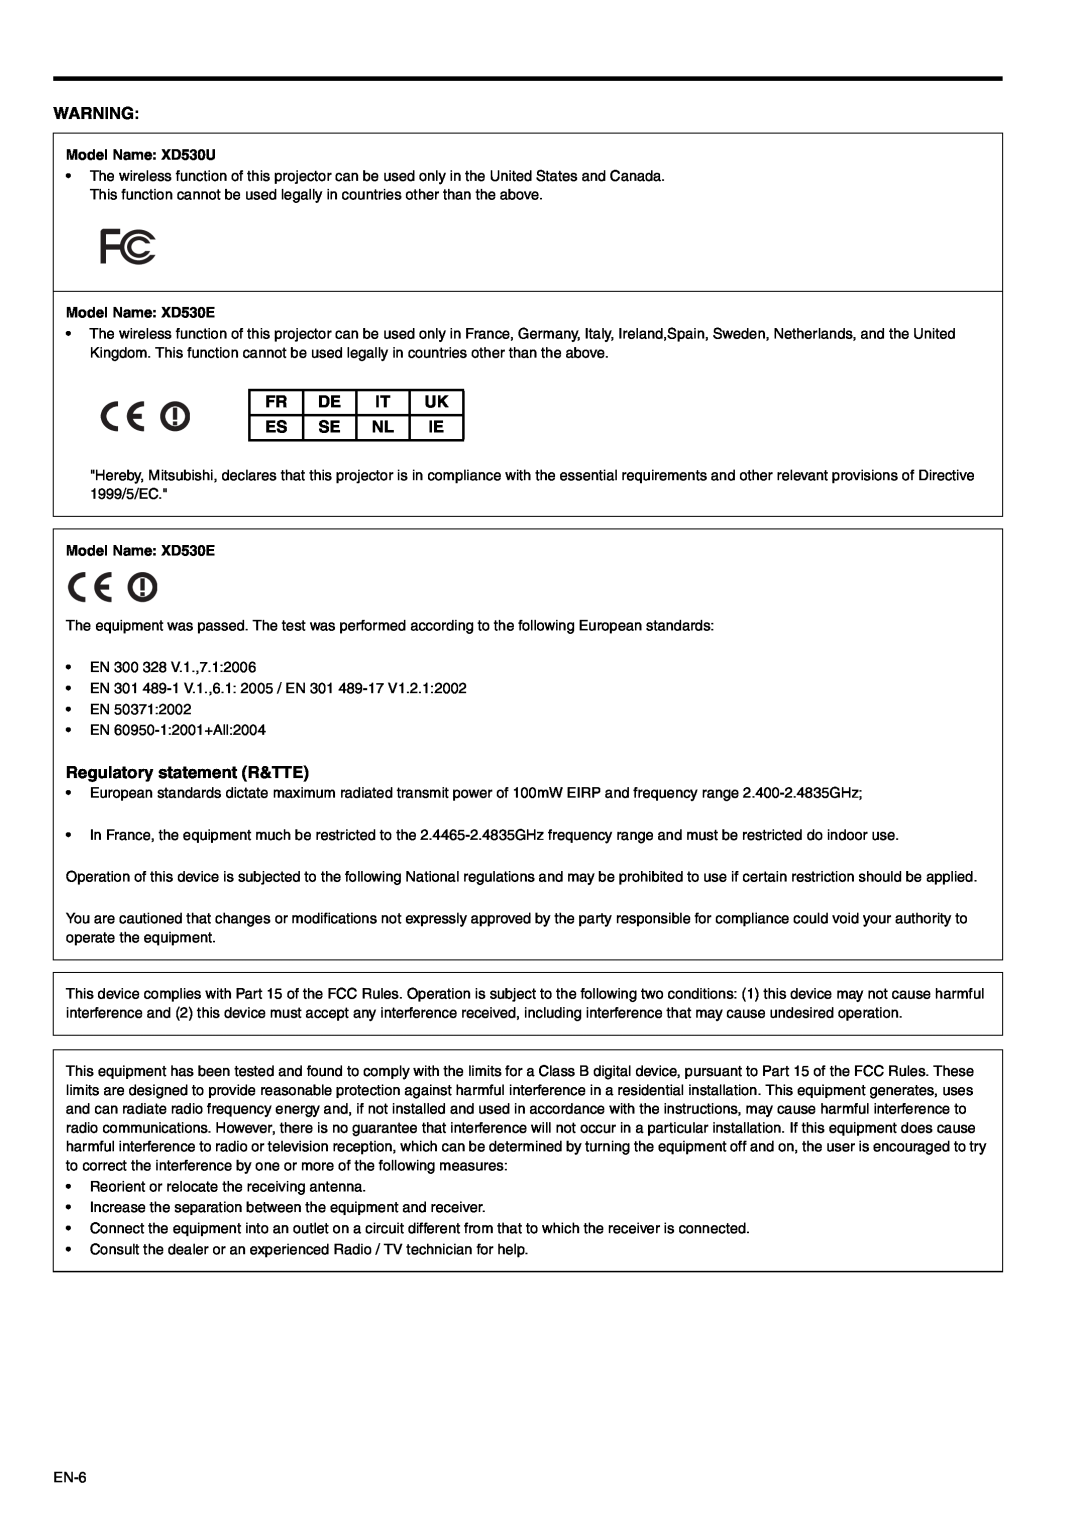 Mitsubishi Electronics user manual Regulatory statement R&TTE, Model Name XD530U, Model Name XD530E 